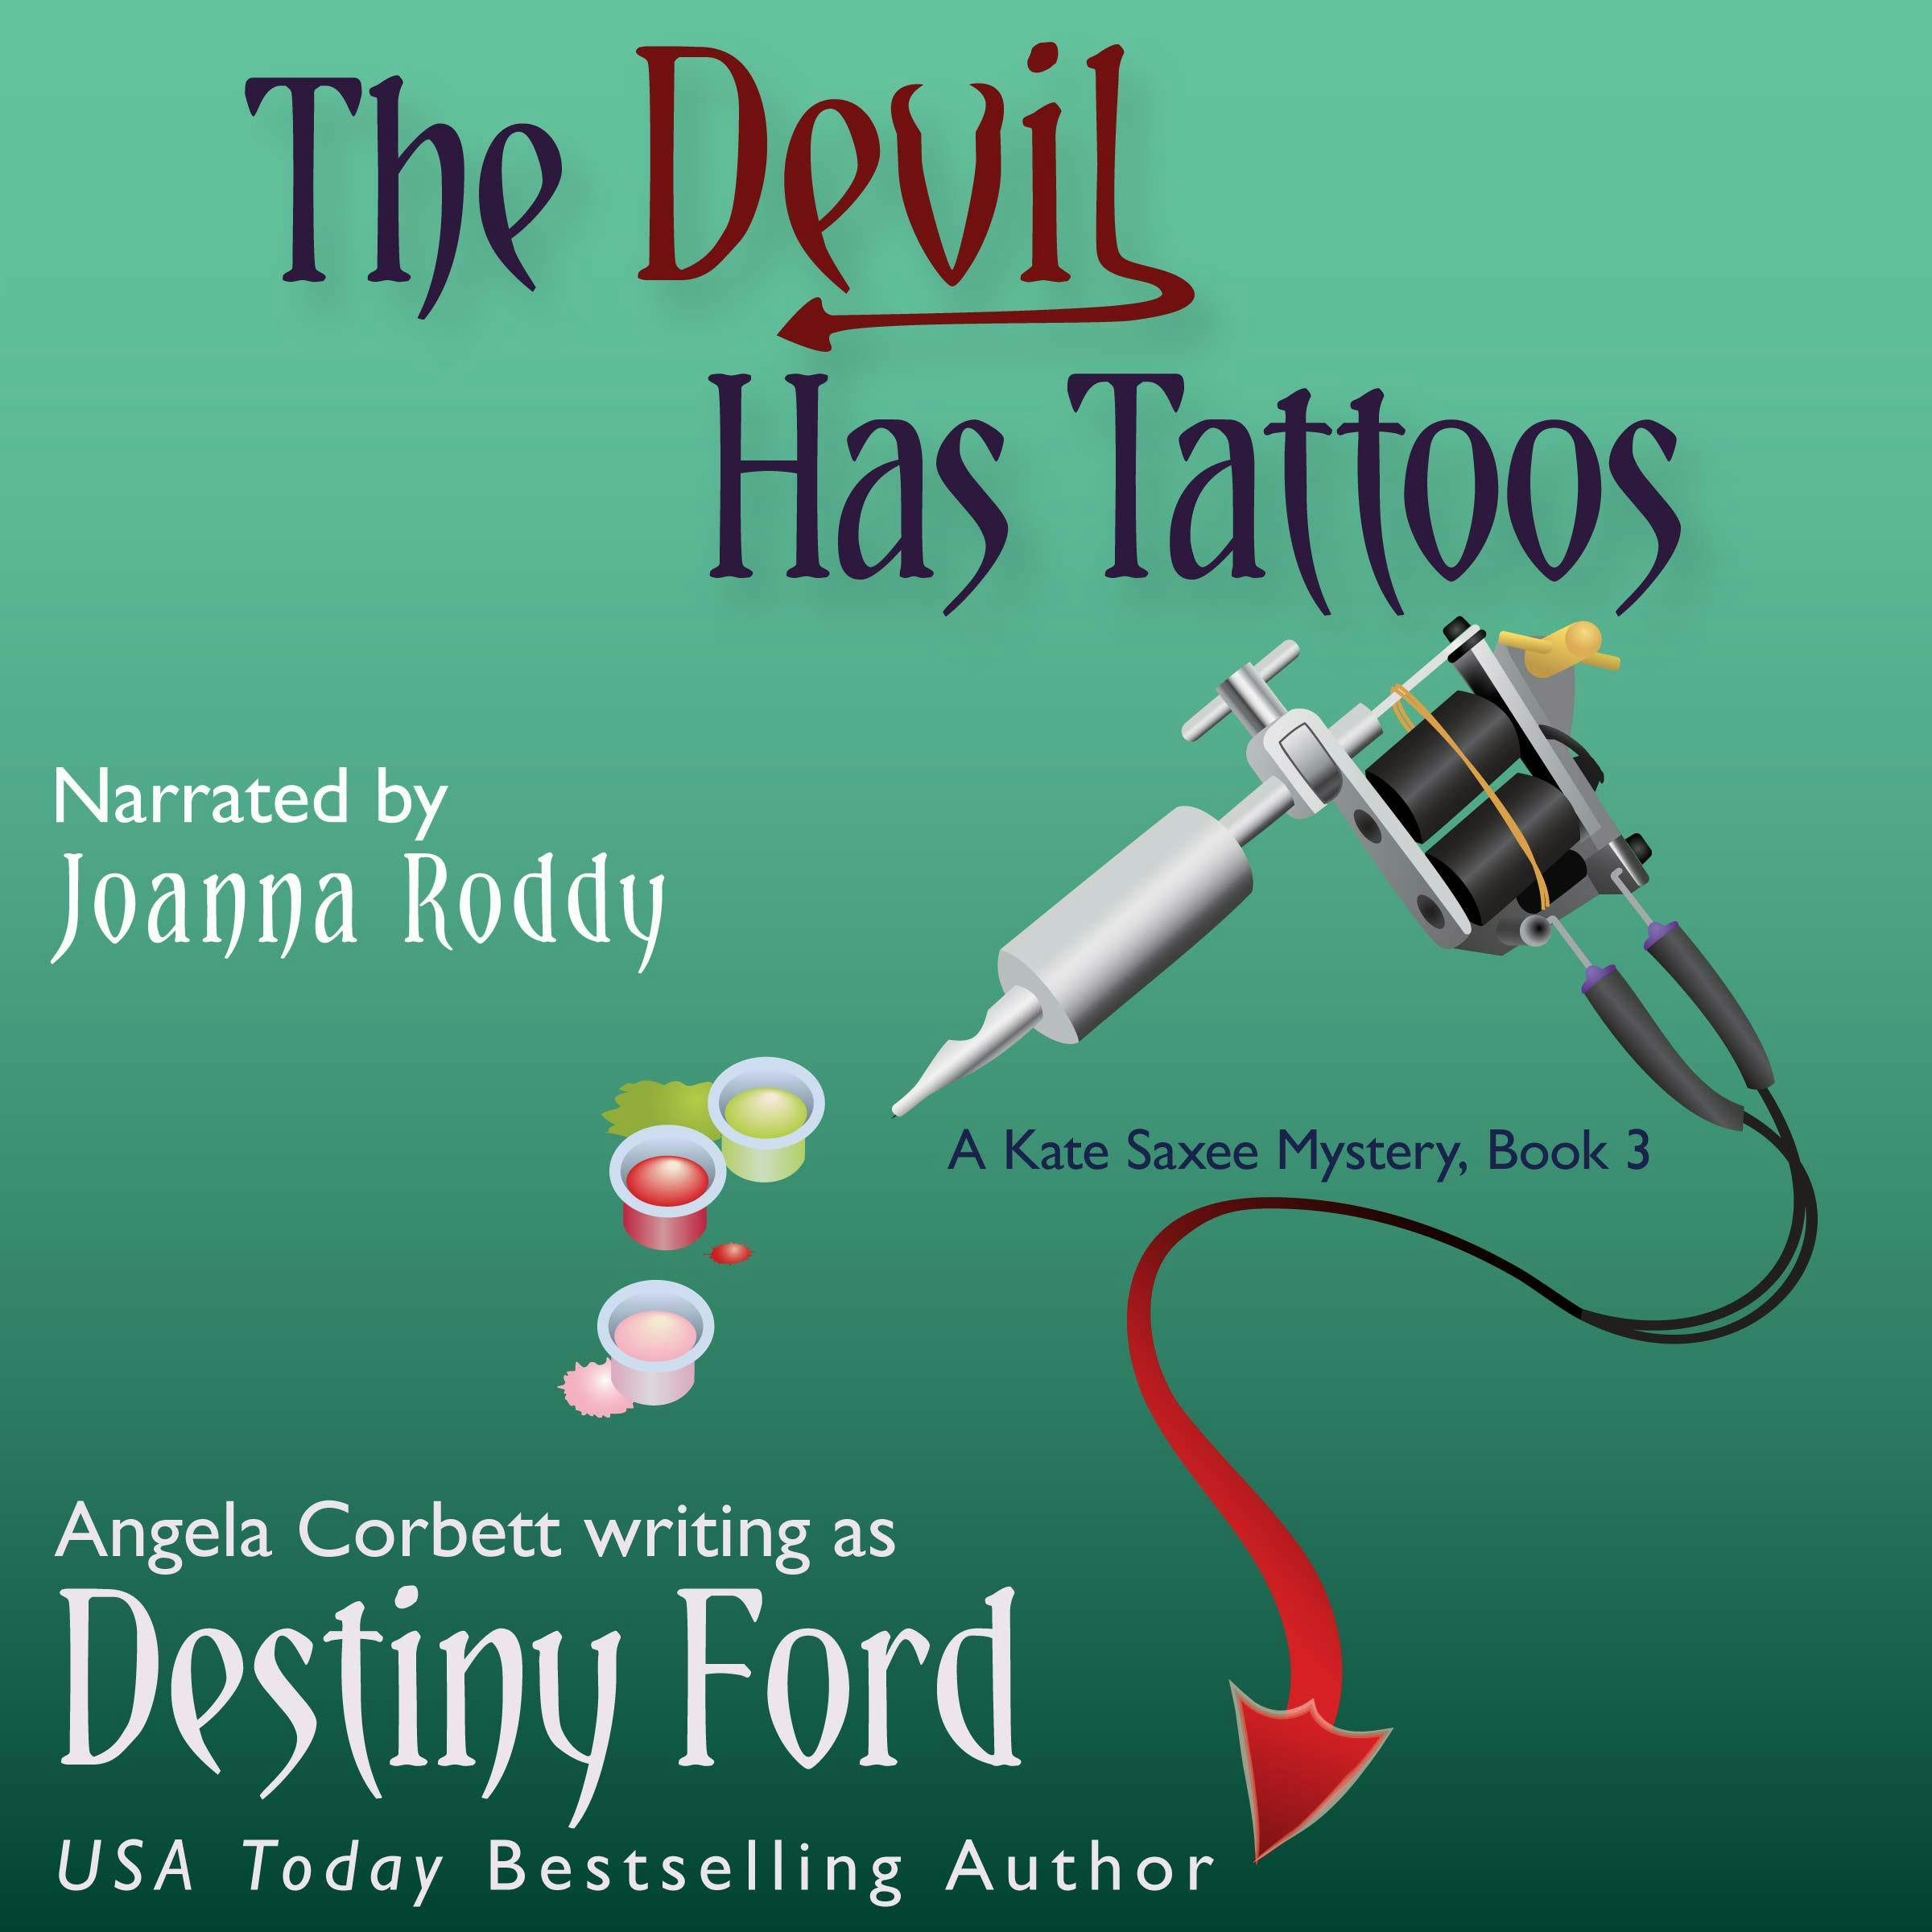 The Devil Has Tattoos - Angela Corbett, Destiny Ford